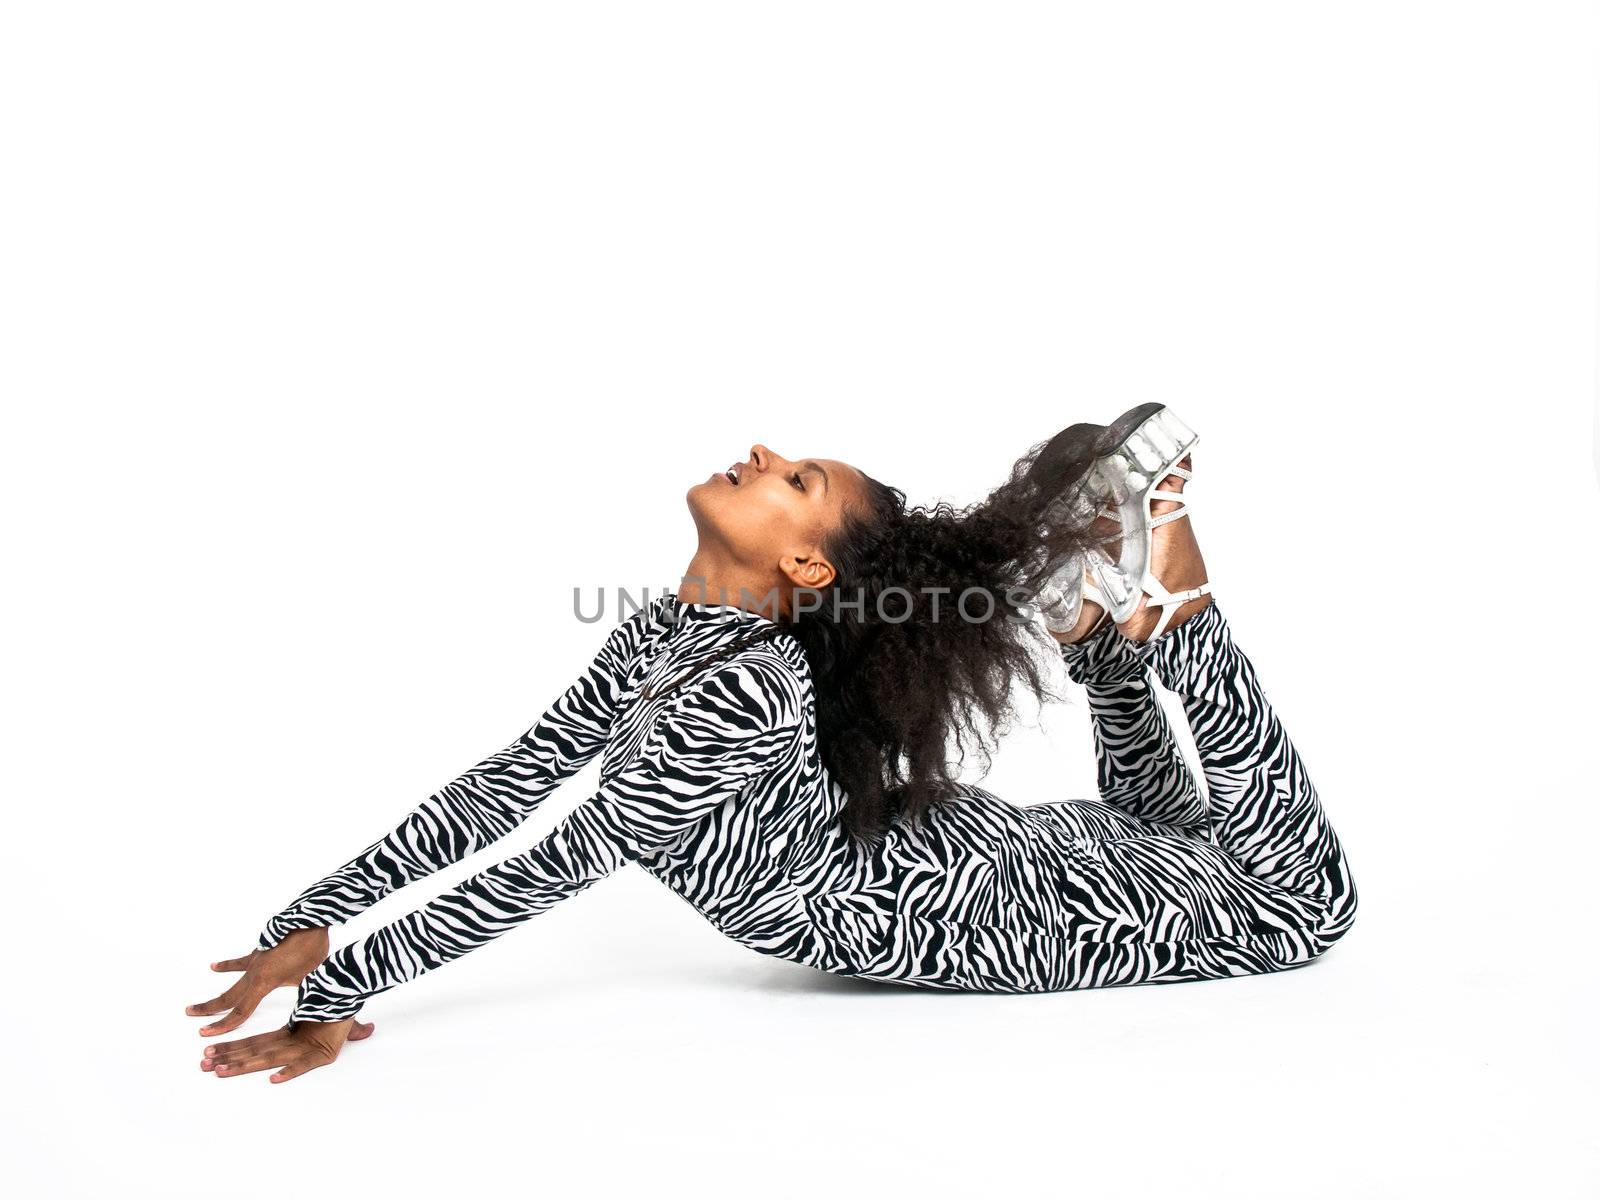 African dancer in a zebra suit in a dance pose